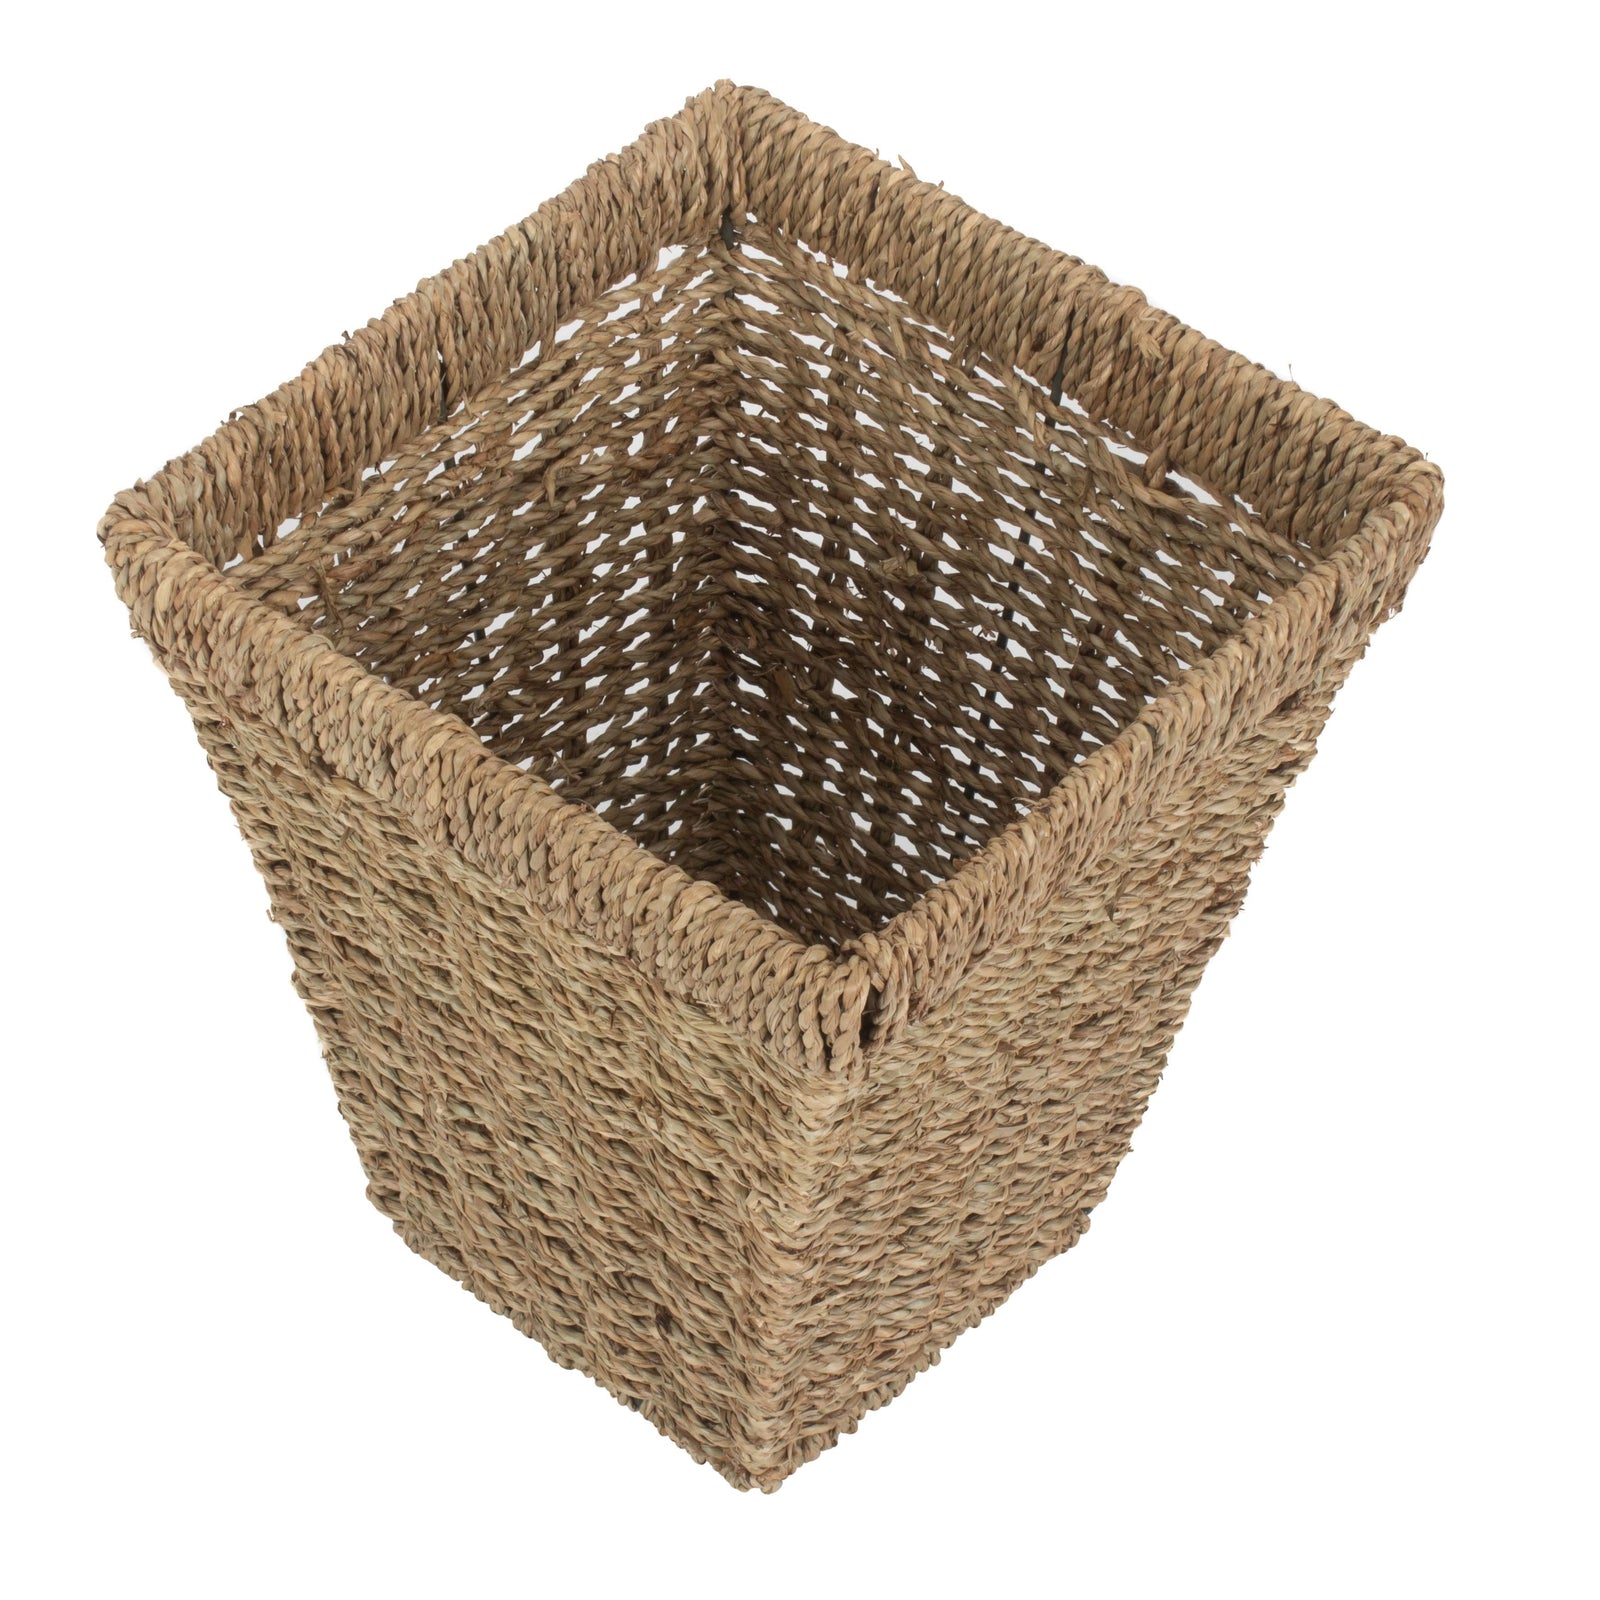 Red Hamper Seagrass Square Waste Paper Basket Bin